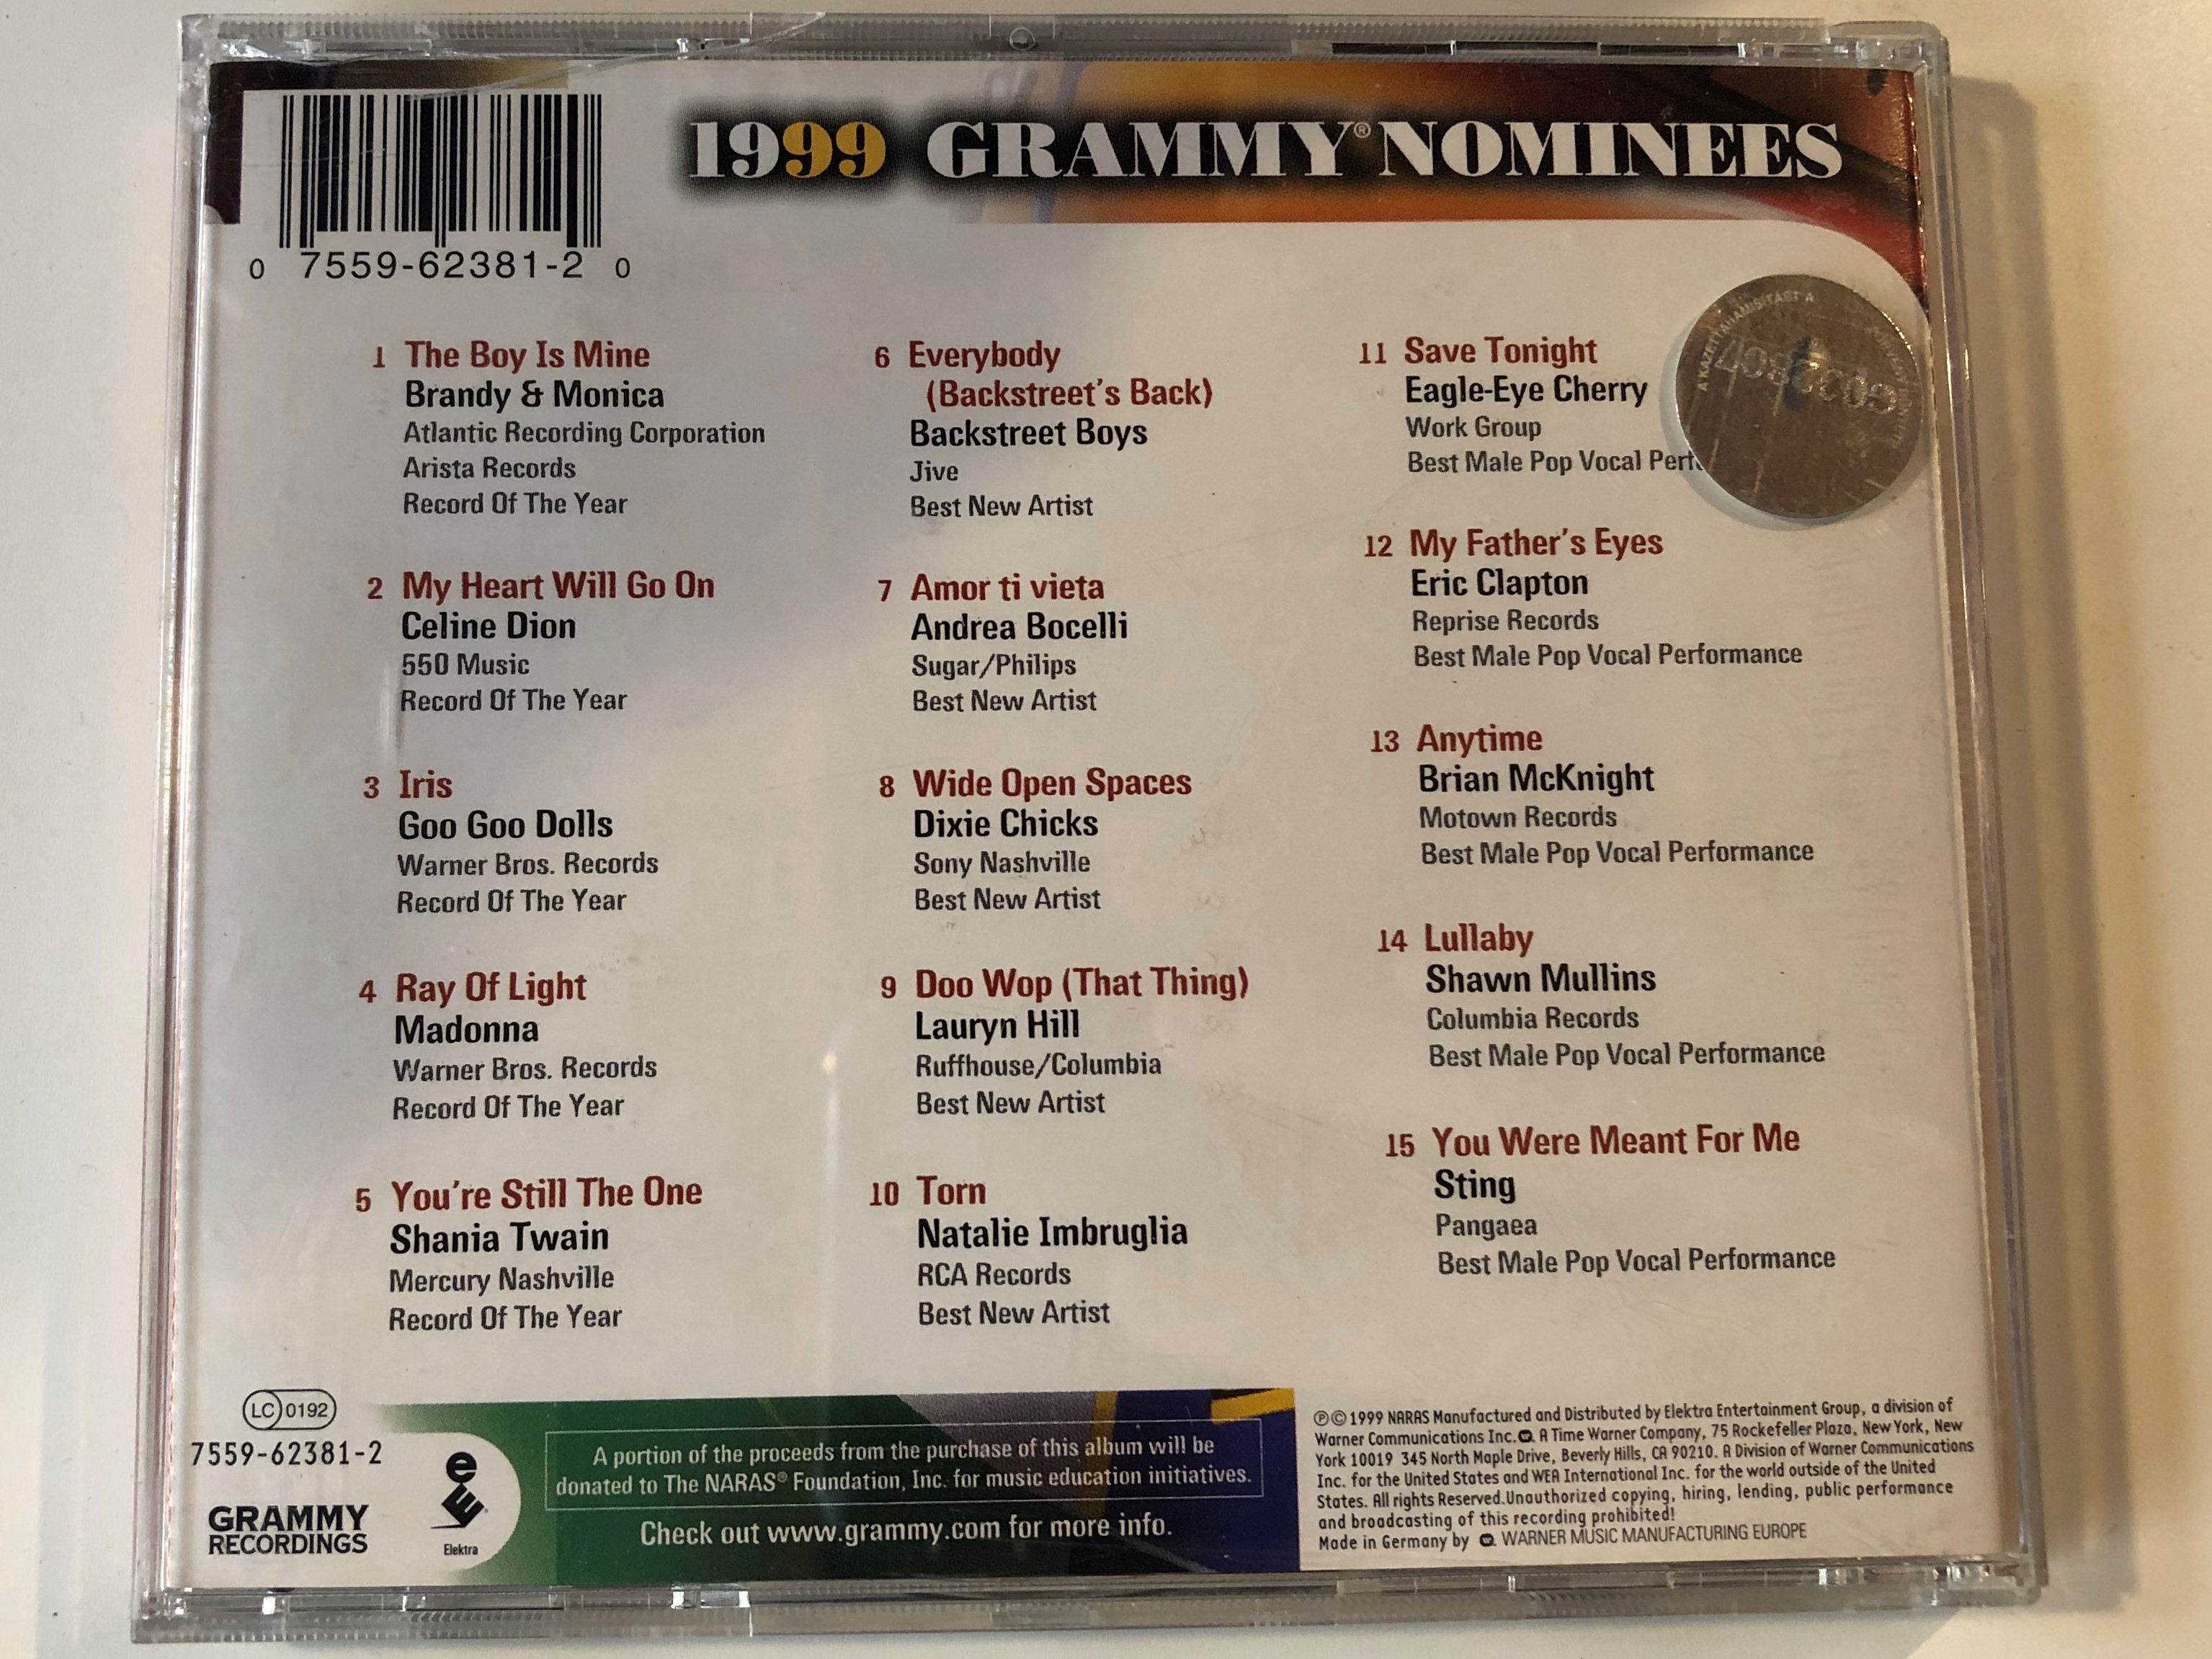 1999-grammy-nominees-top-u.-s.-hits-inc.-brandy-monica-the-boy-is-mine-celine-dion-my-heart-will-go-on-goo-goo-dolls-iris-madonna-ray-of-light-shania-twain-you-re-still-the-on.jpg